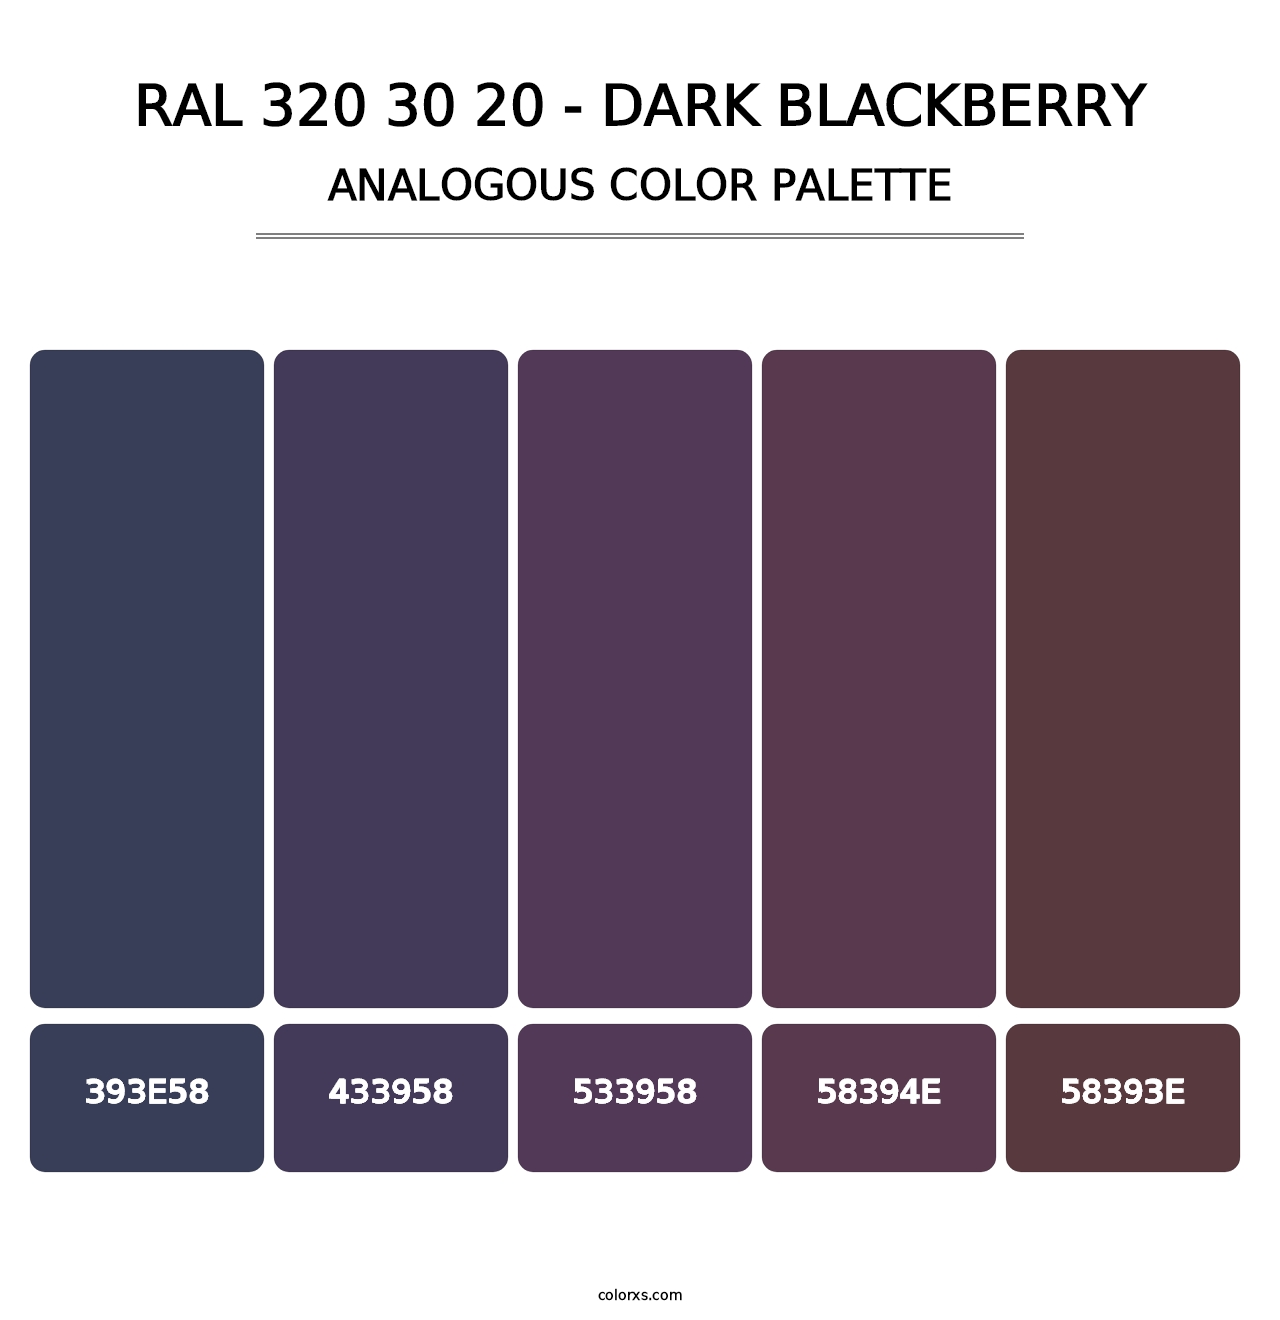 RAL 320 30 20 - Dark Blackberry - Analogous Color Palette